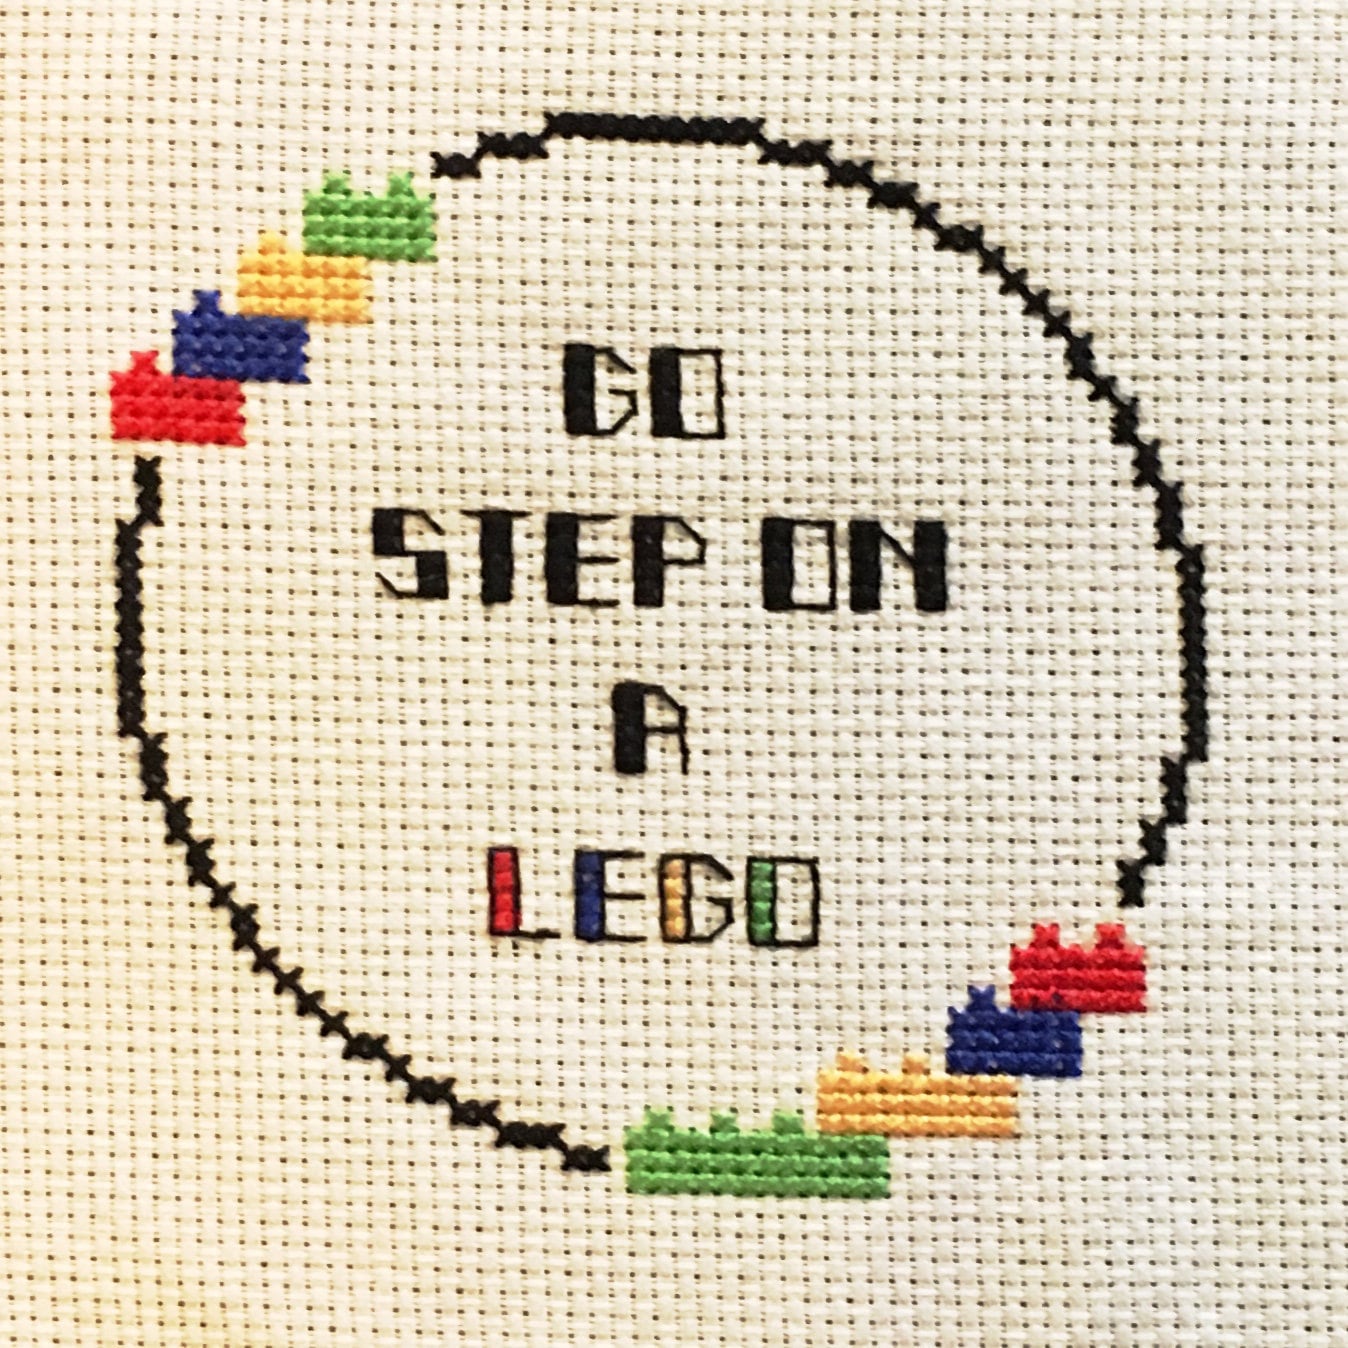 Go Step On A Lego cross stitch pattern